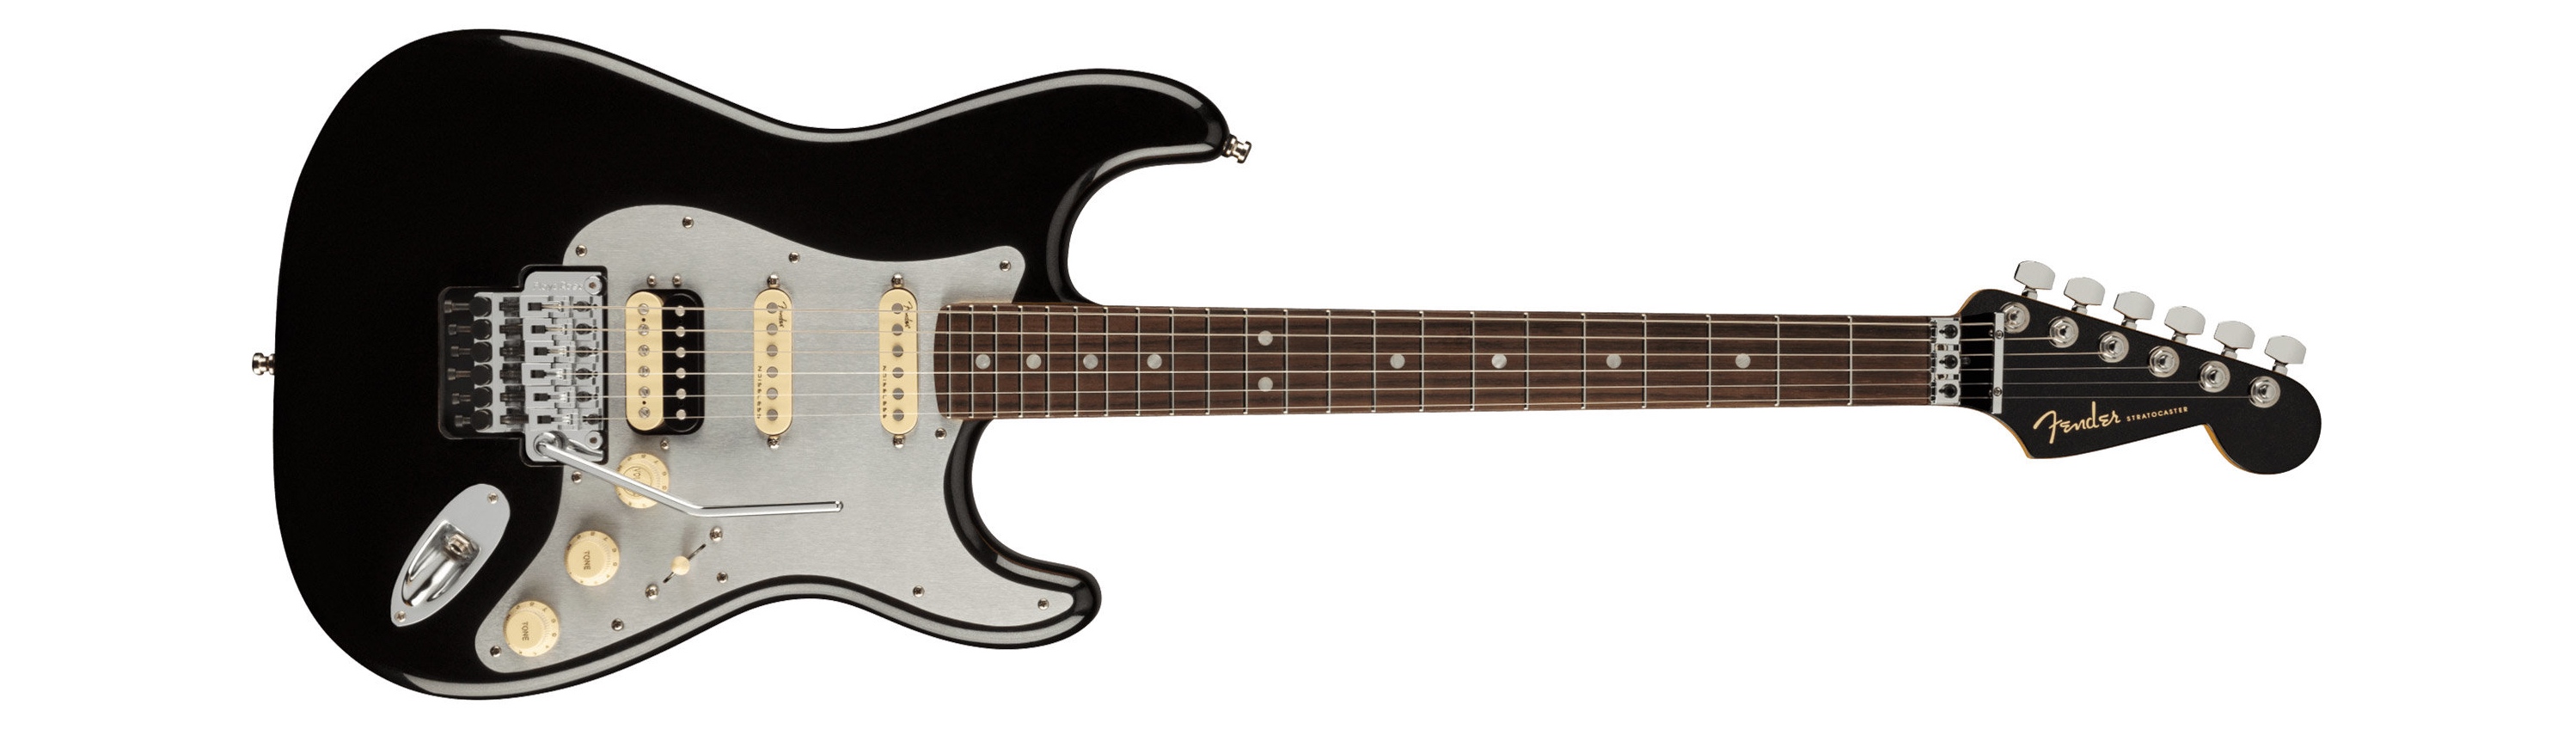 Fender Ultra Luxe Strat Floyd Rose hss mystic black